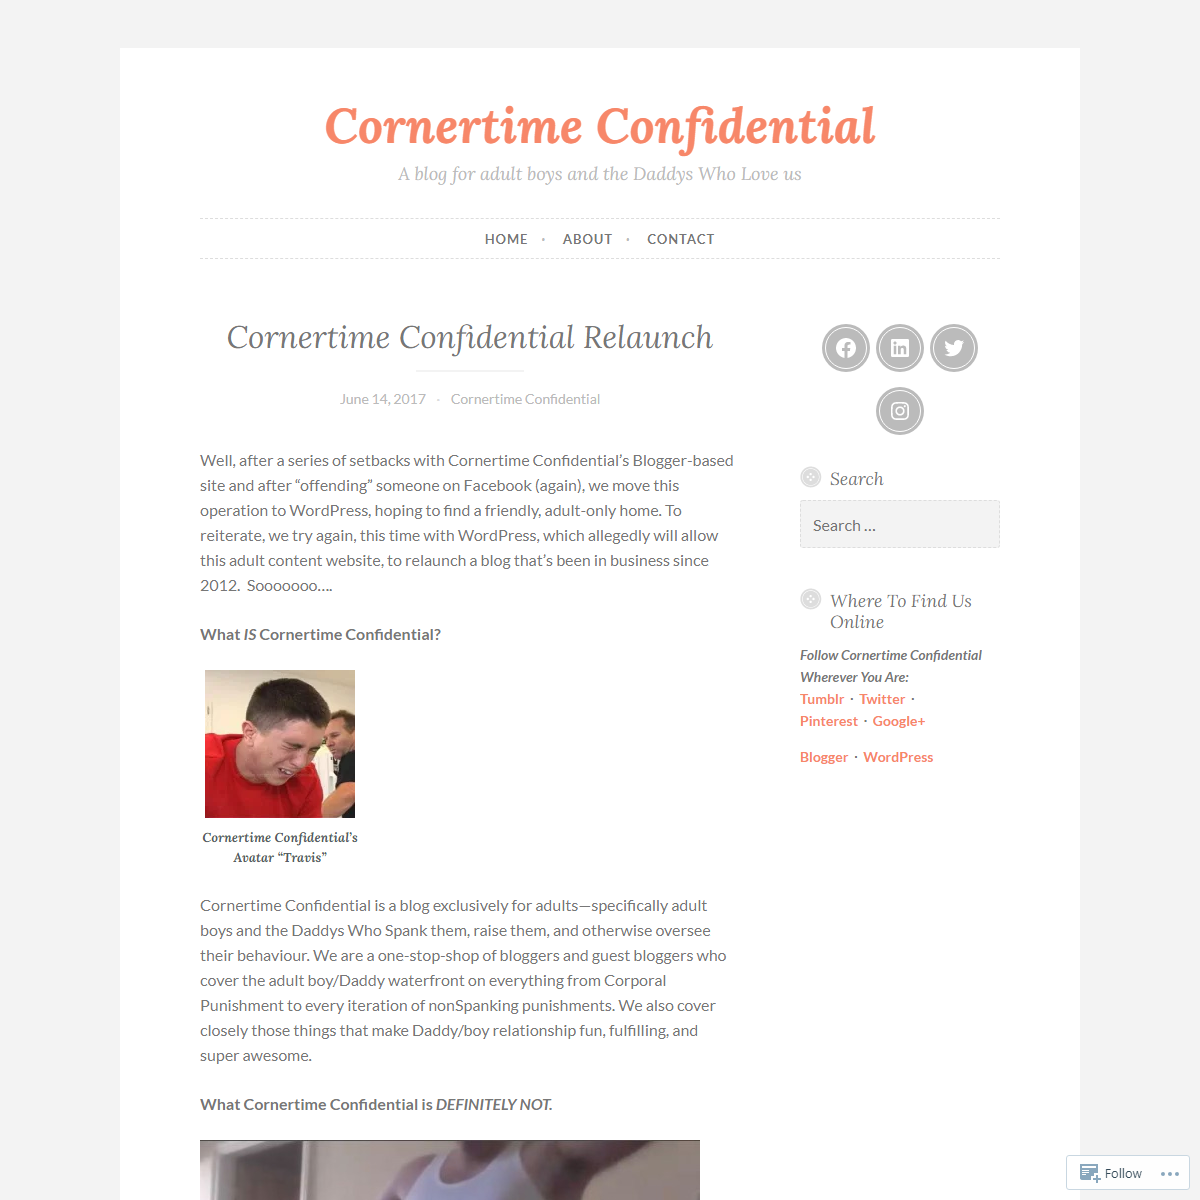 A complete backup of https://cornertimeconfidential.wordpress.com/2017/06/14/cornertime-confidential-relaunch/